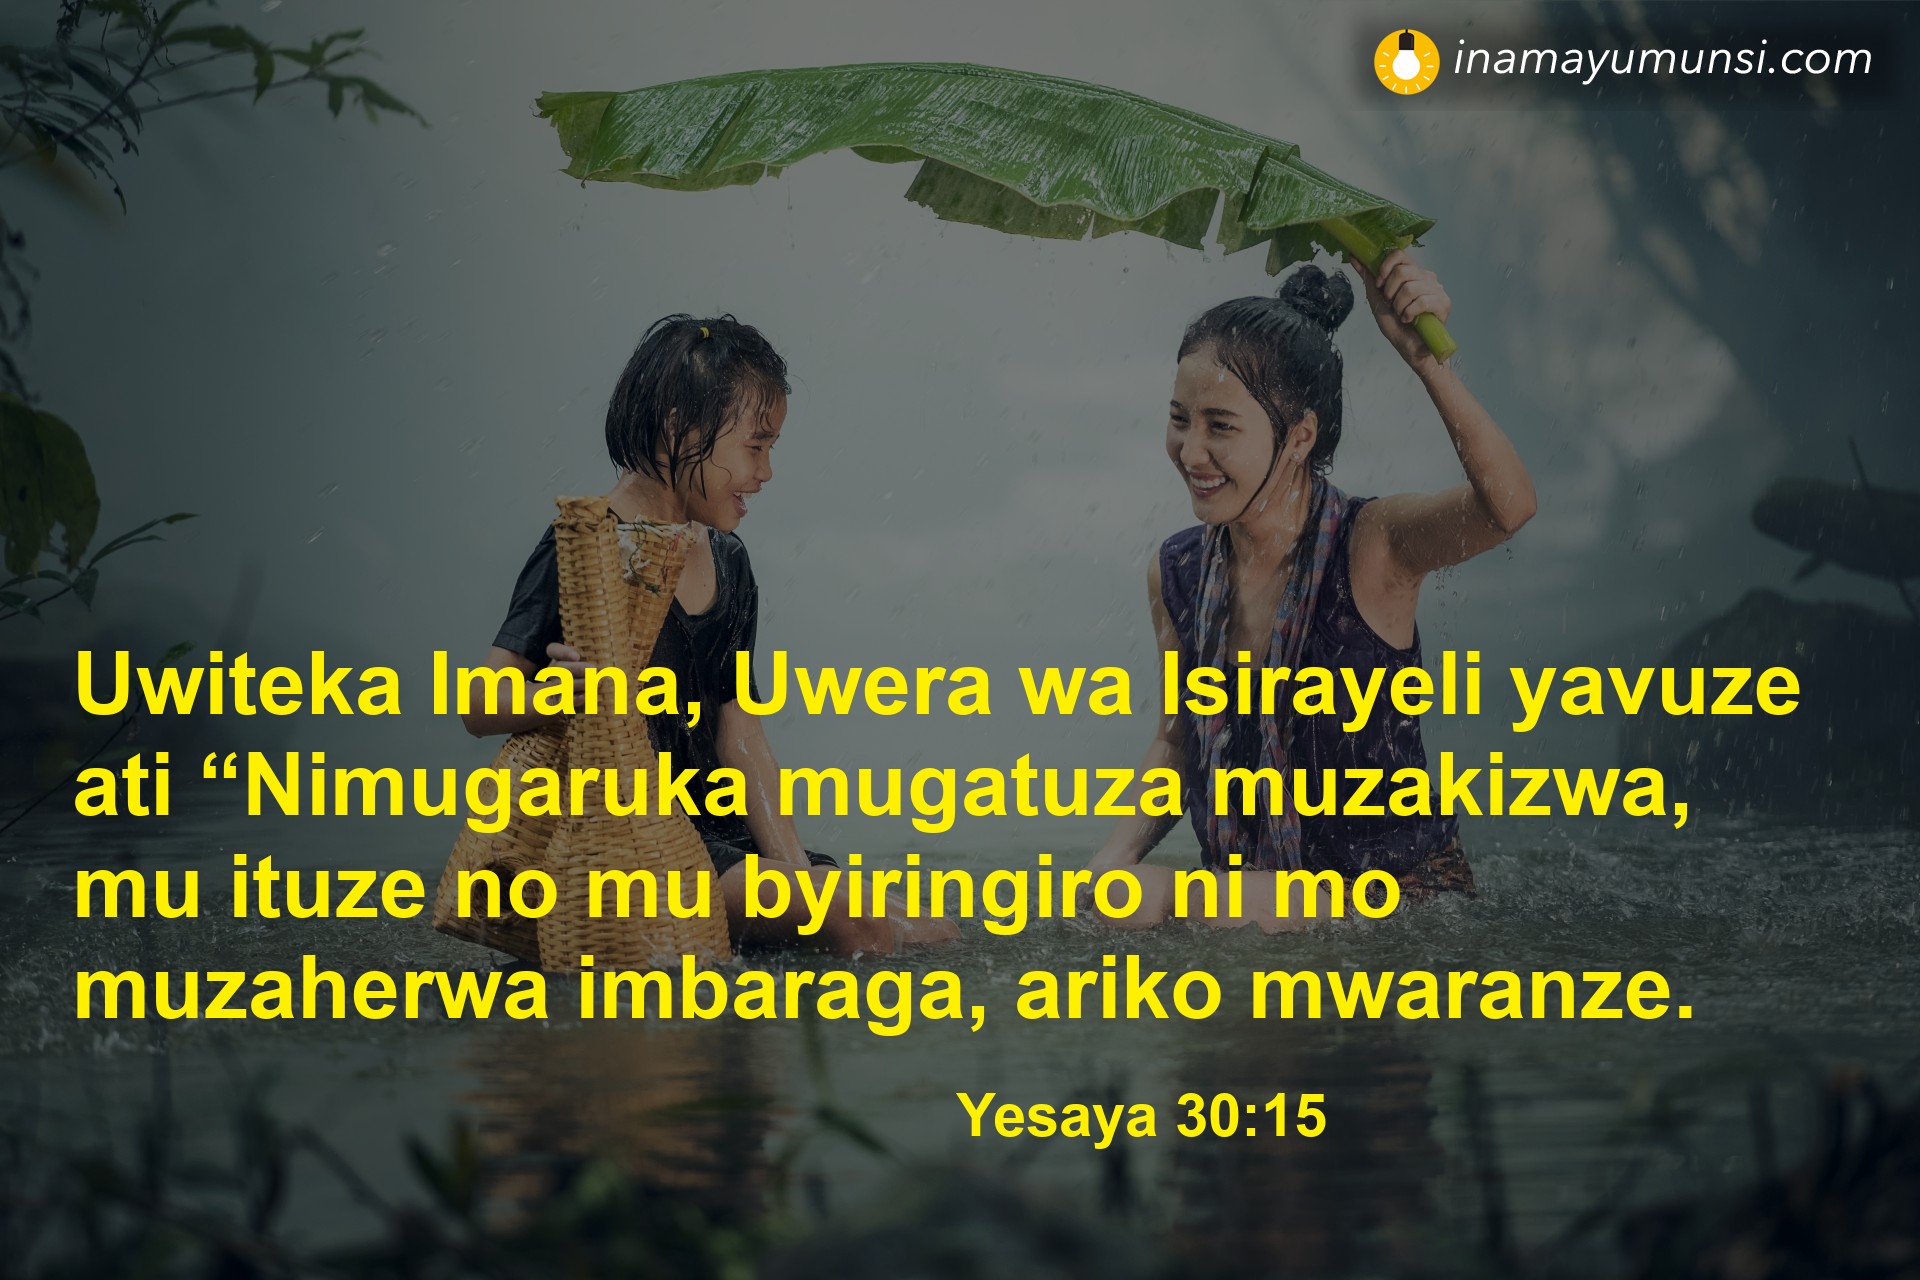 Yesaya 30:15 ⇒ Uwiteka Imana, Uwera wa Isirayeli yavuze ati “Nimugaruka mugatuza ..